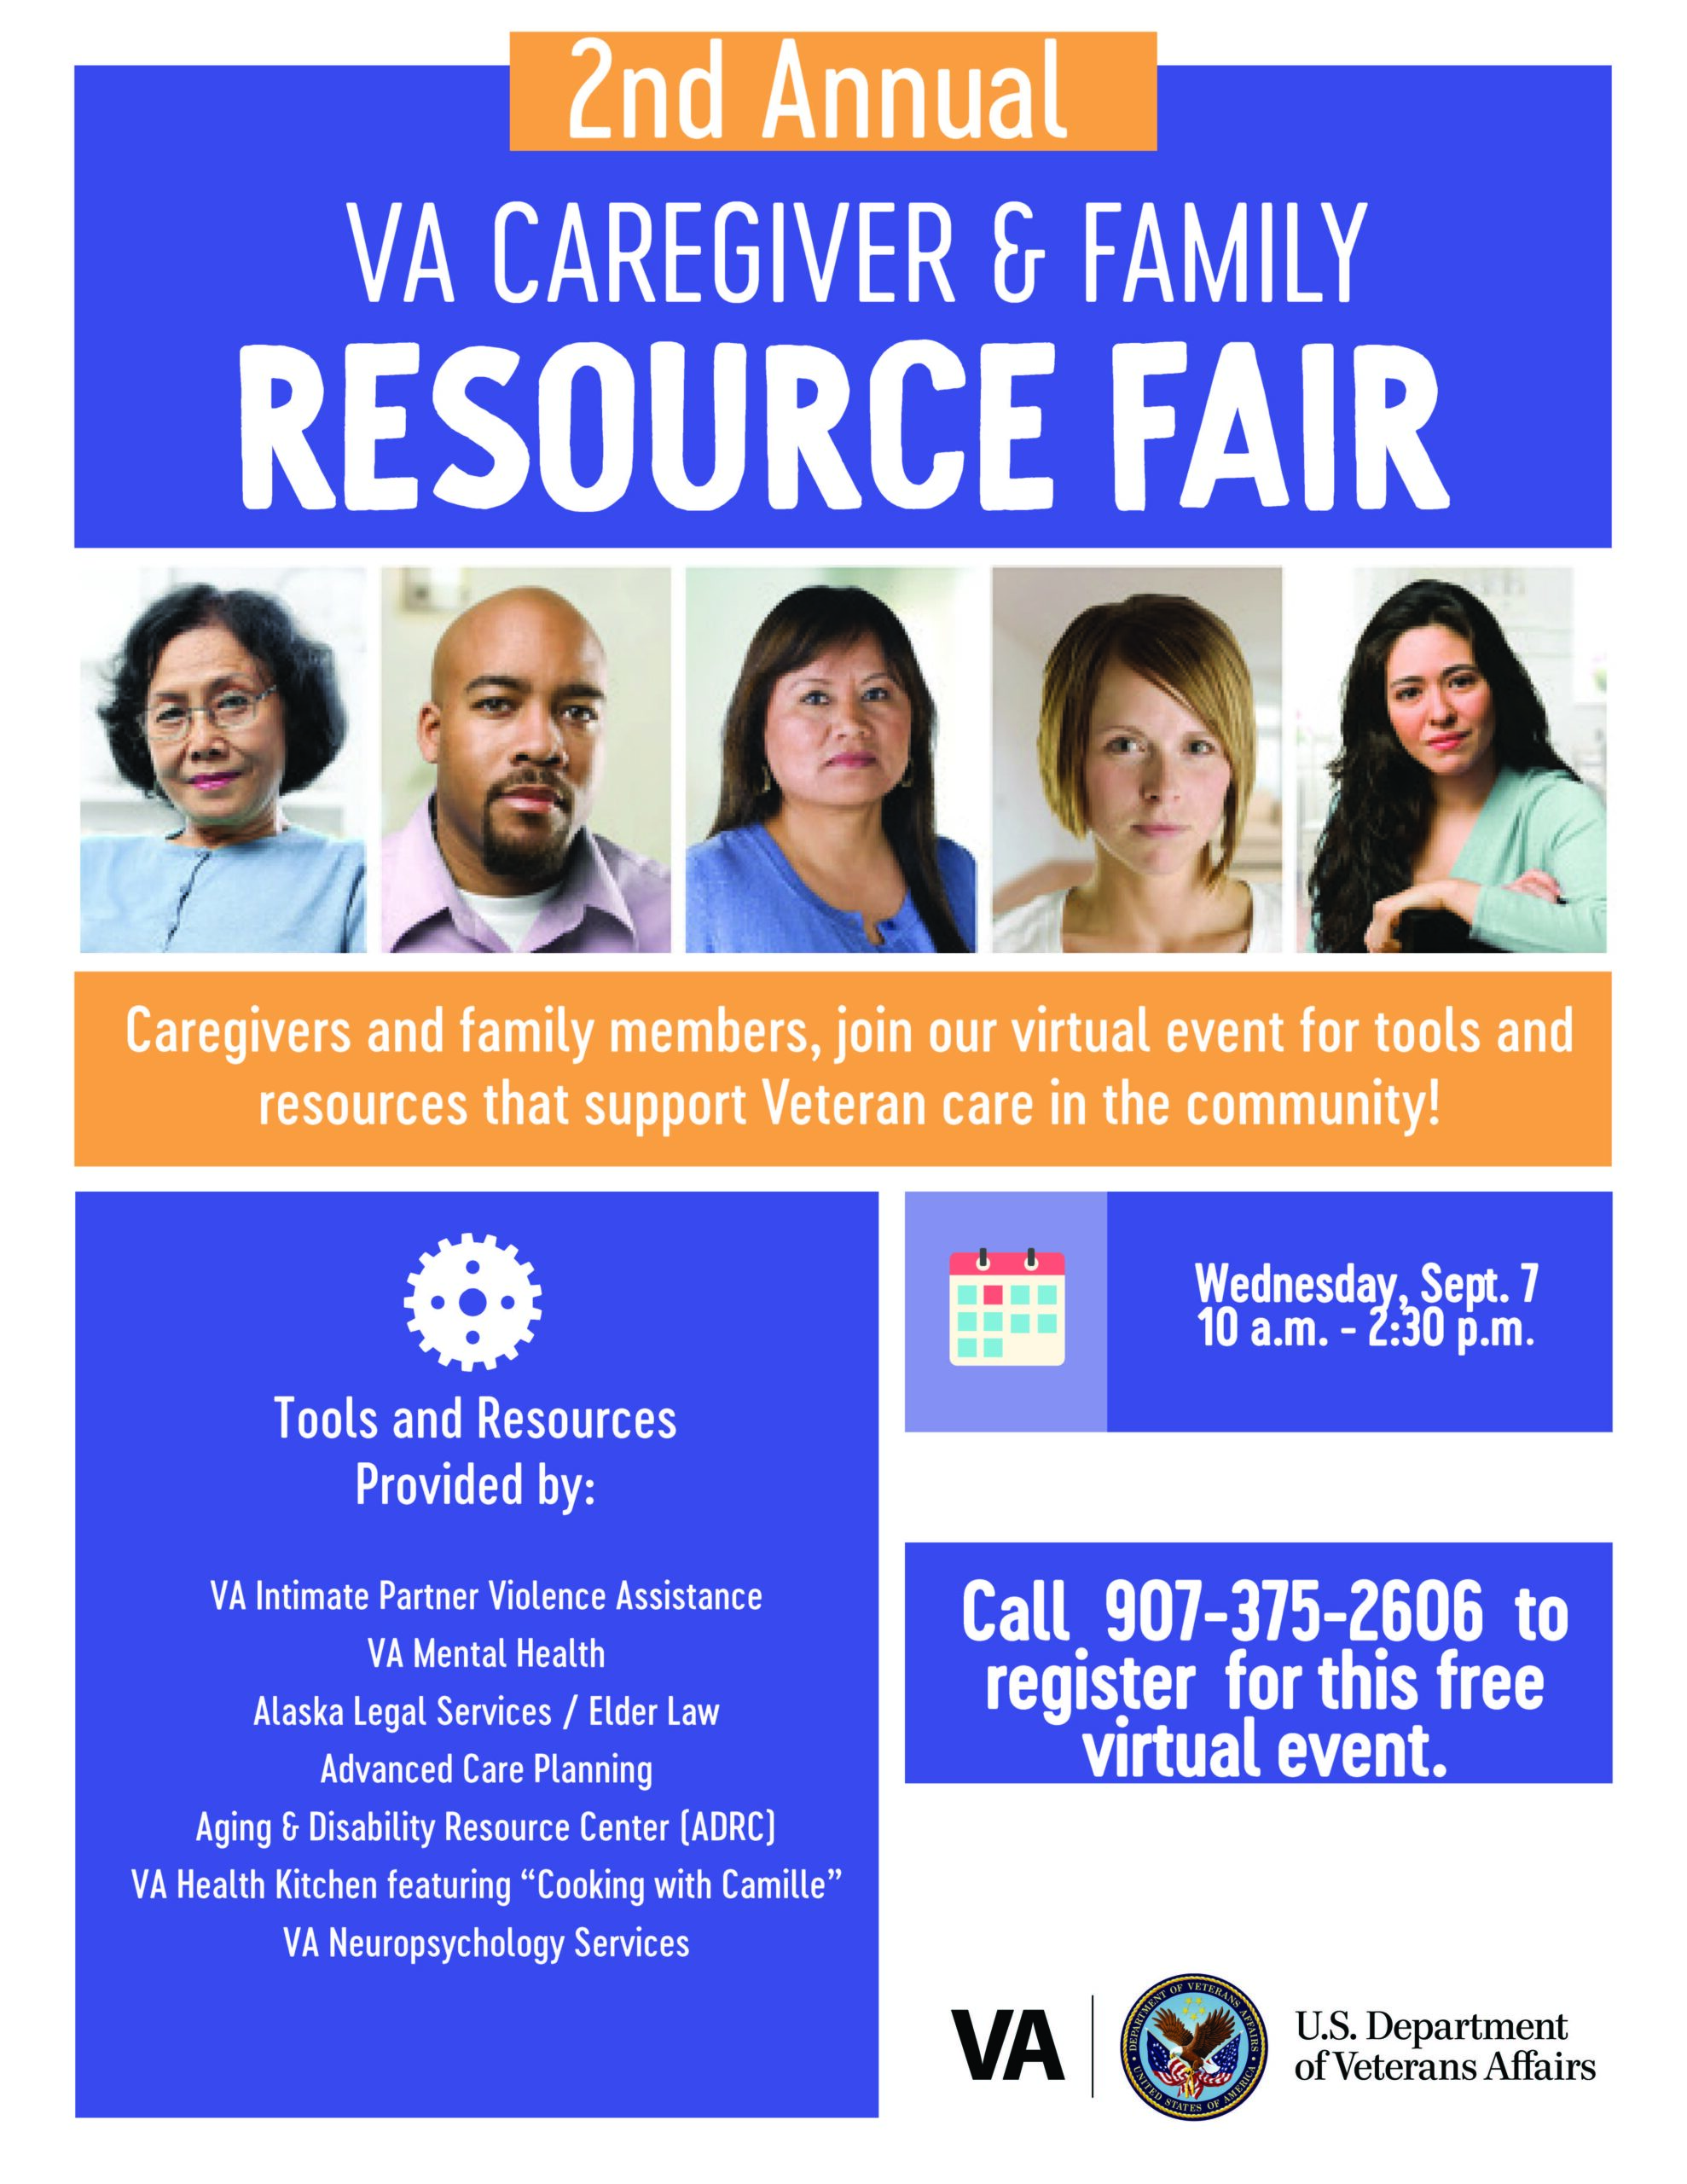 VA Caregiver and Family Resource Fair